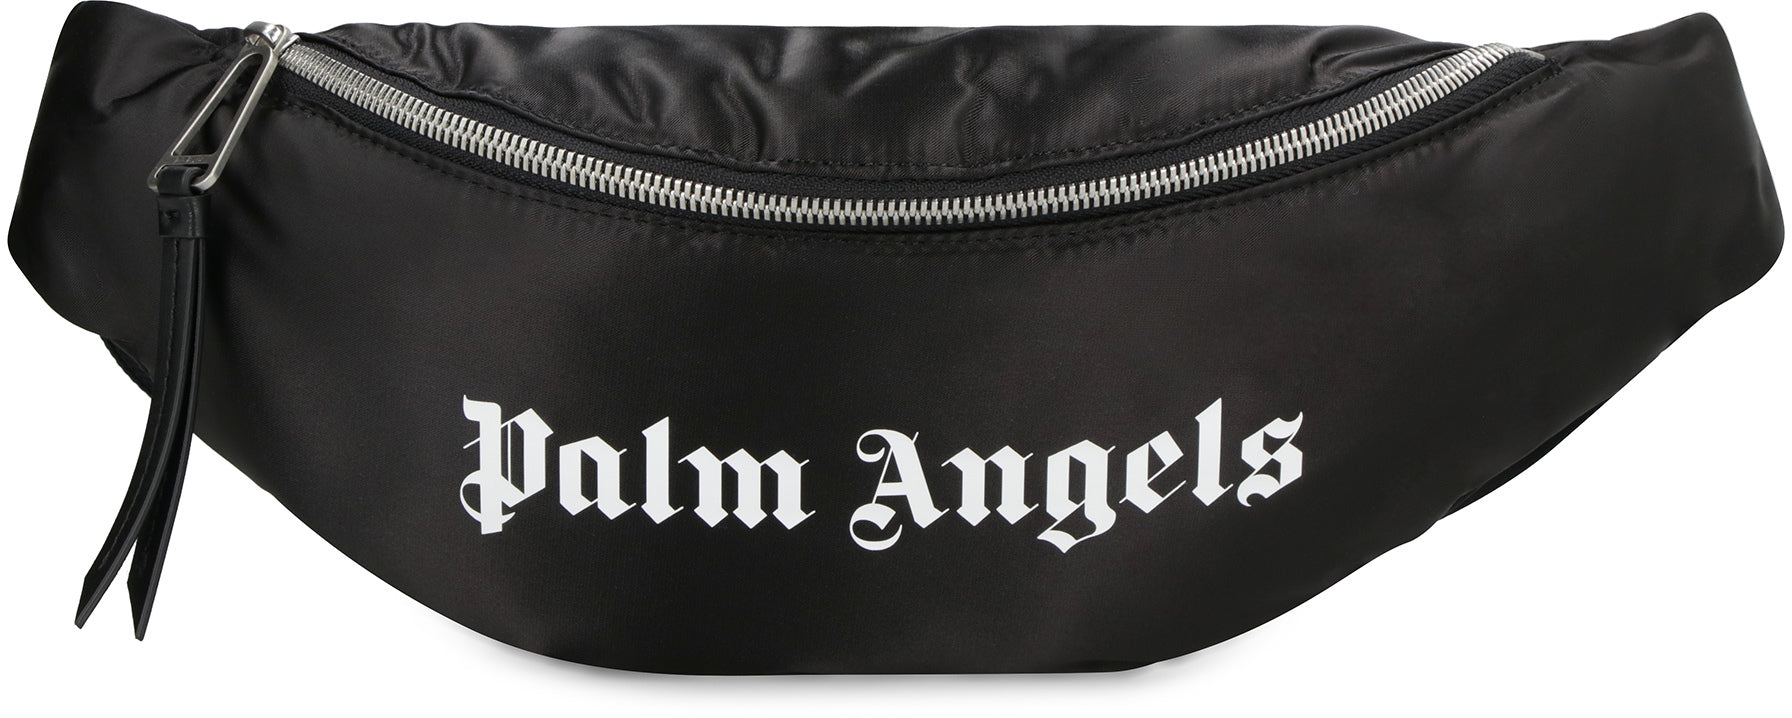 Palm Angels - Nylon belt bag black - The Corner